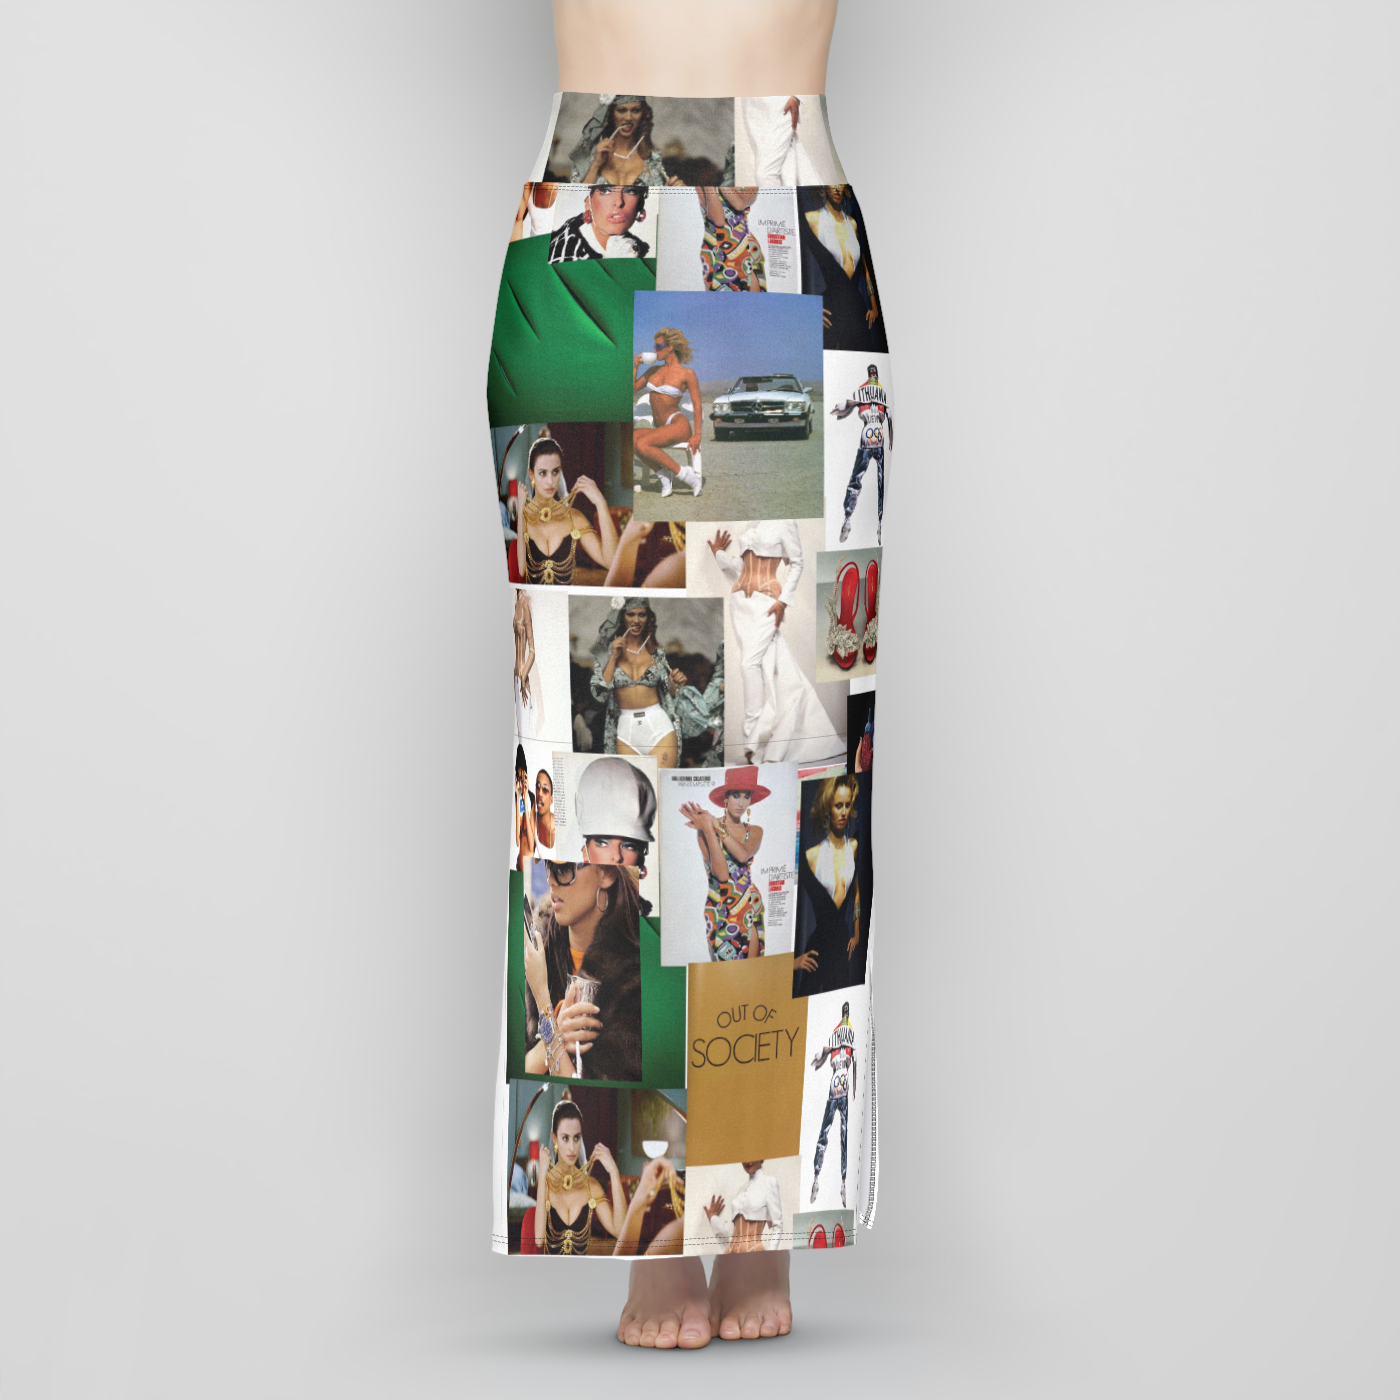 Fashion Skirt